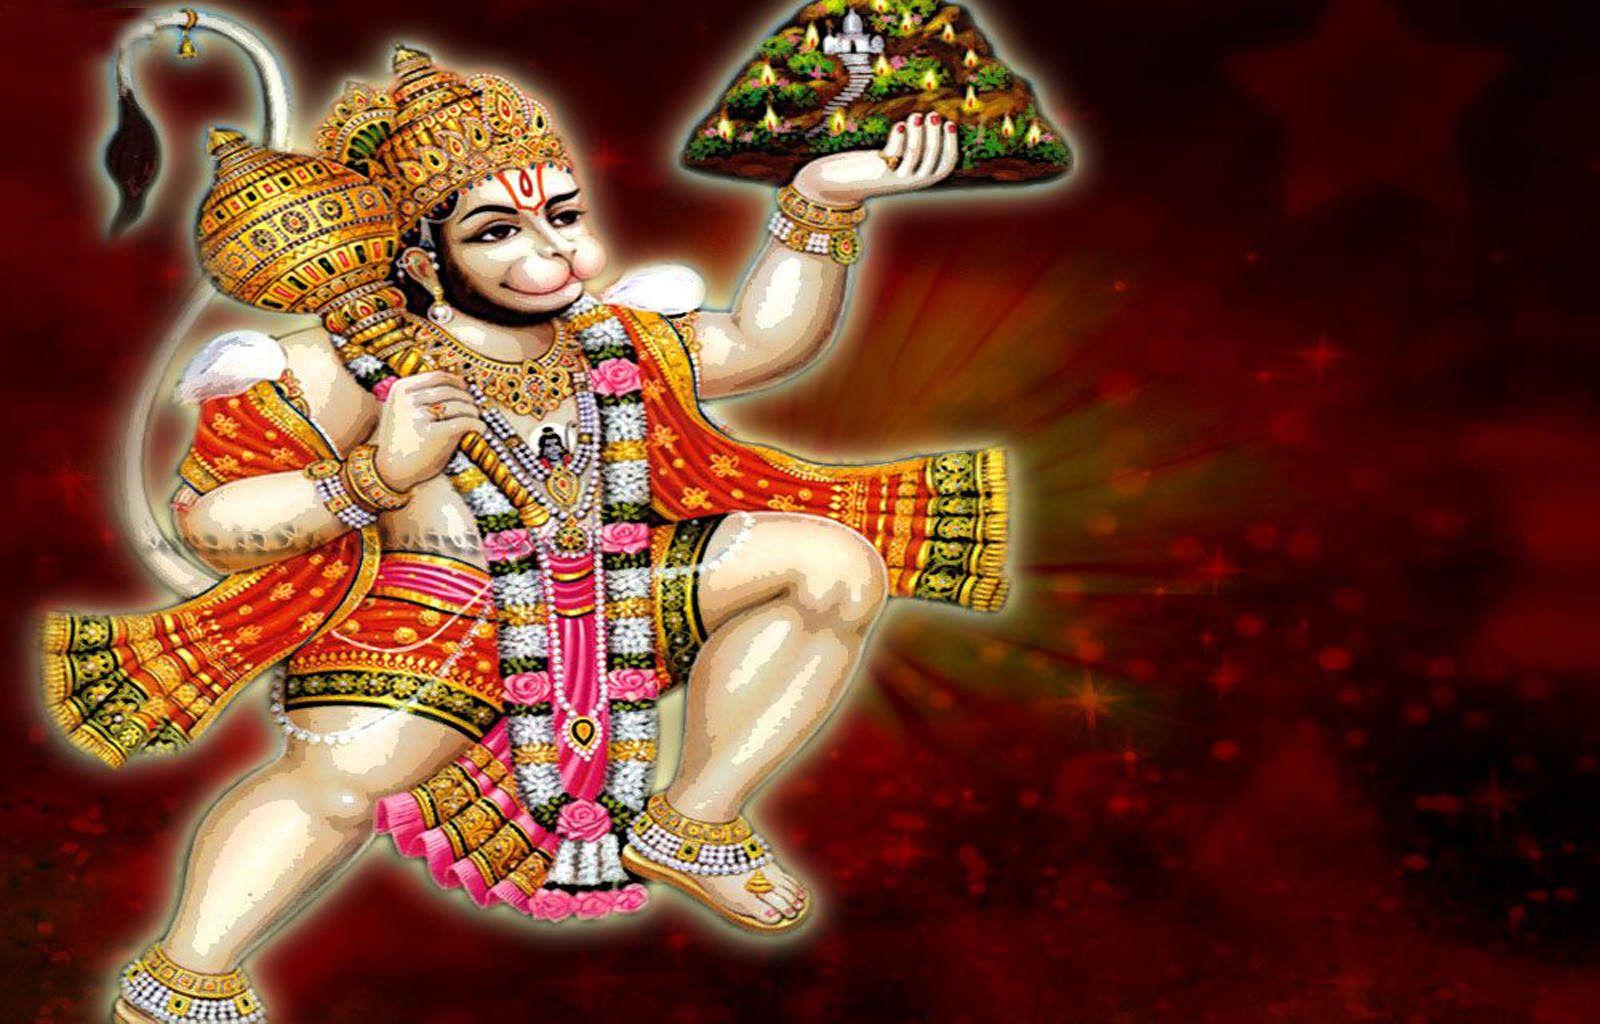 Lord Hanuman God animated hanuman wallpaper for iphone and mobile